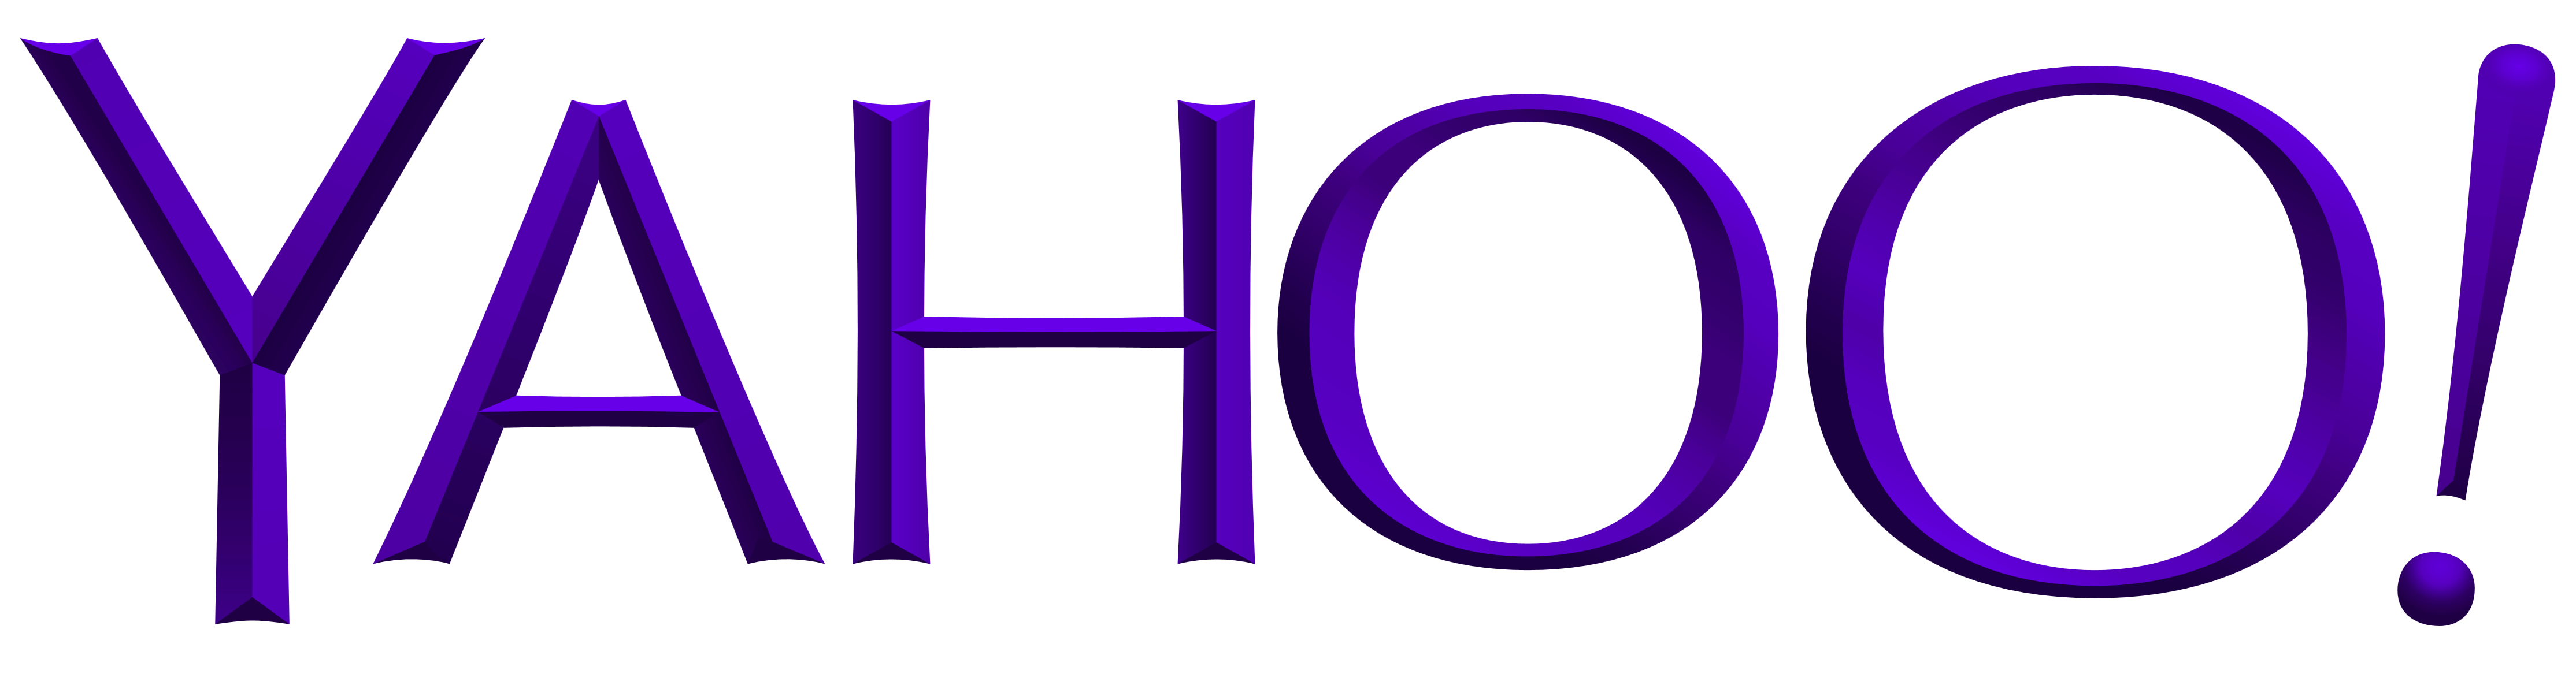 Yahoo logo, logotype